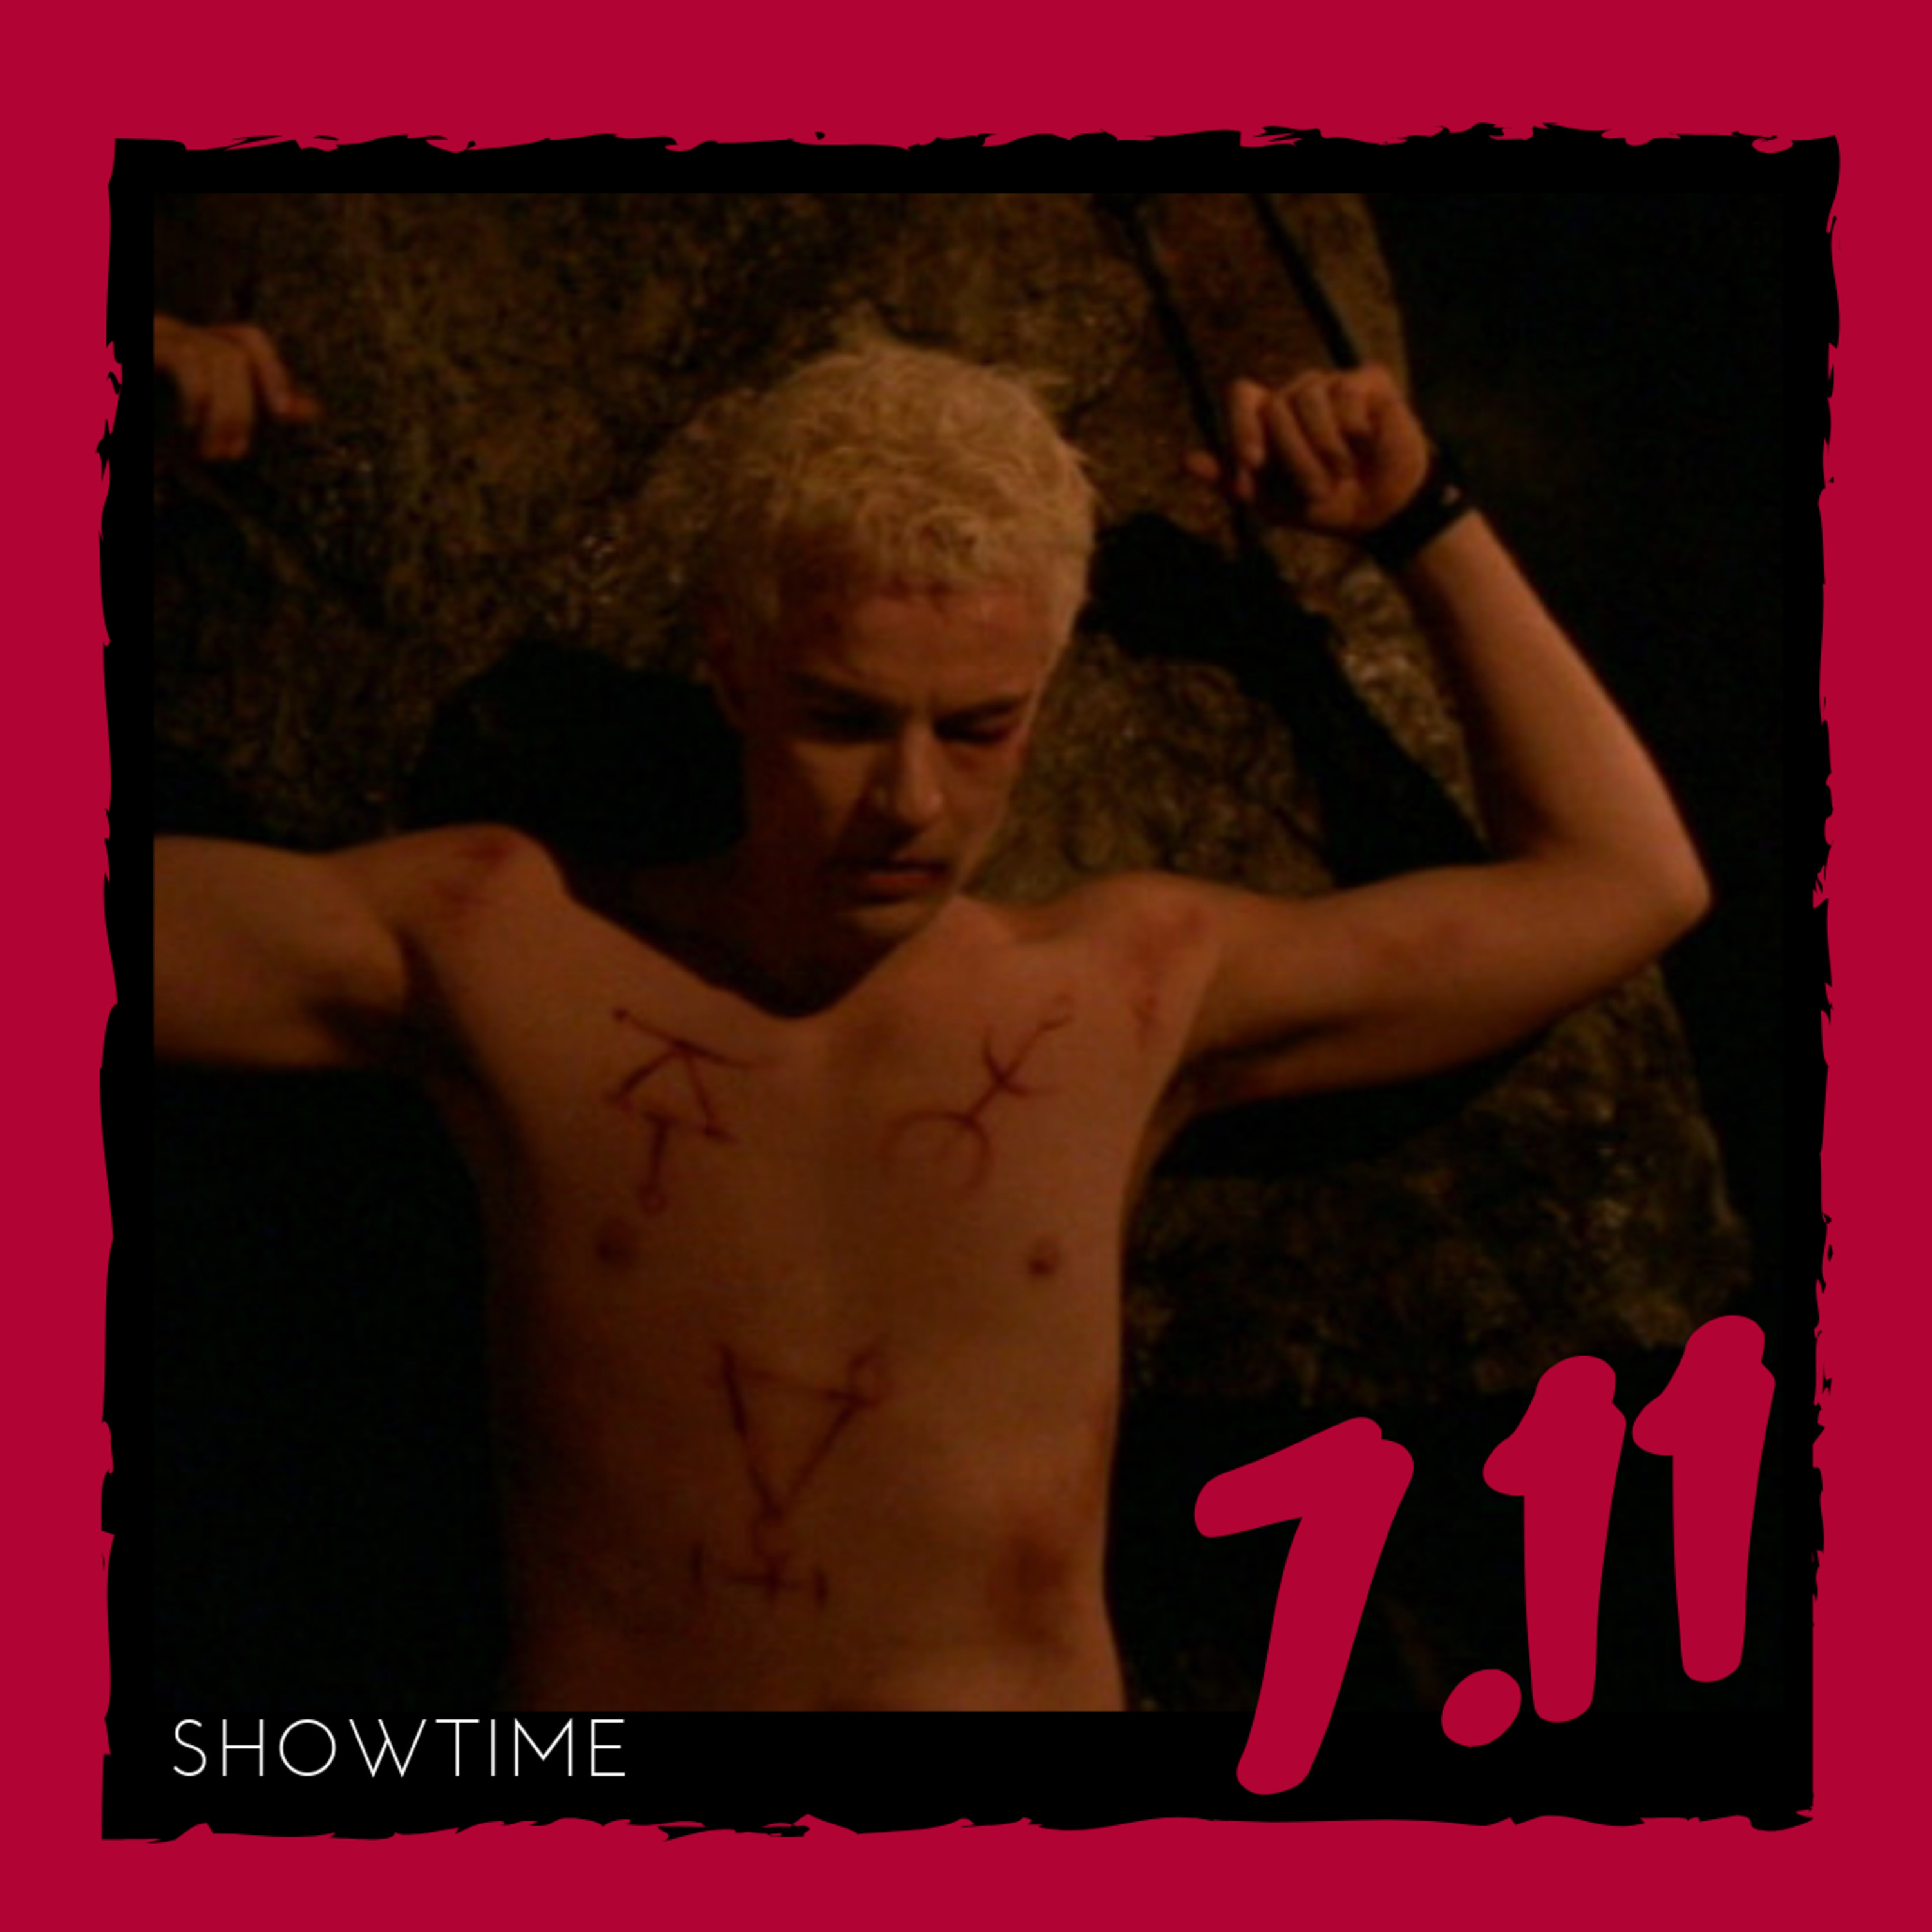 7.11 – ”Showtime”